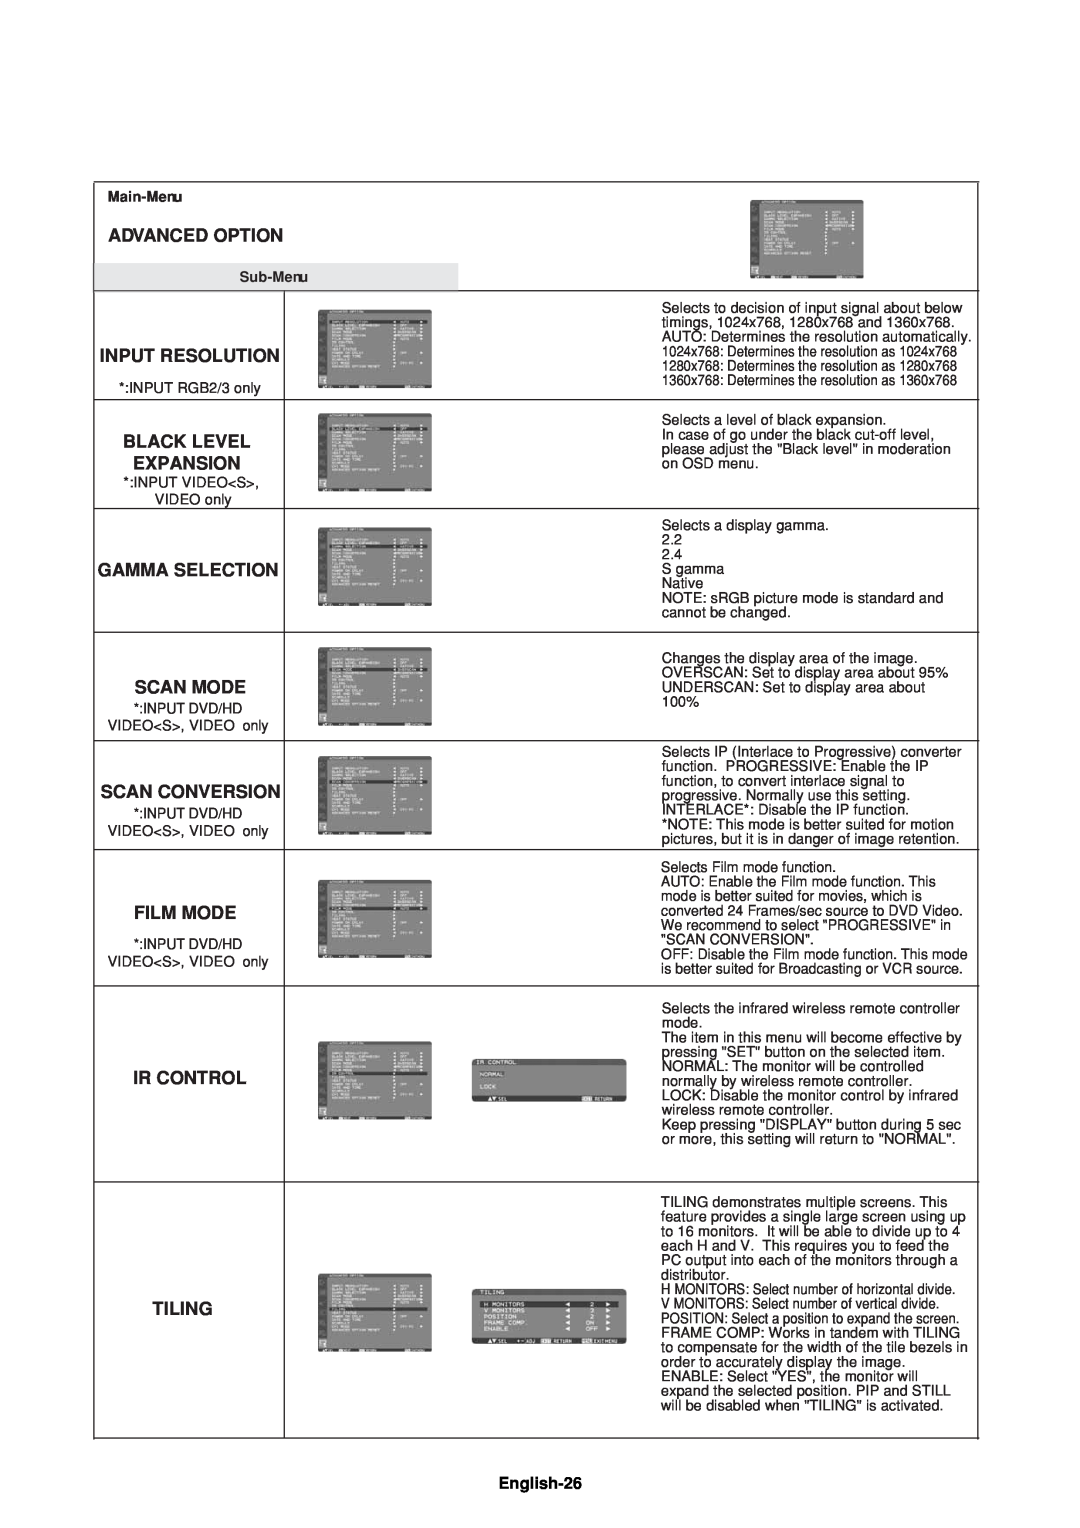 Mitsubishi Electronics LDT32IV (BH548), LDT37IV (BH544) manual English-26, 1024x768 Determines the resolution as 